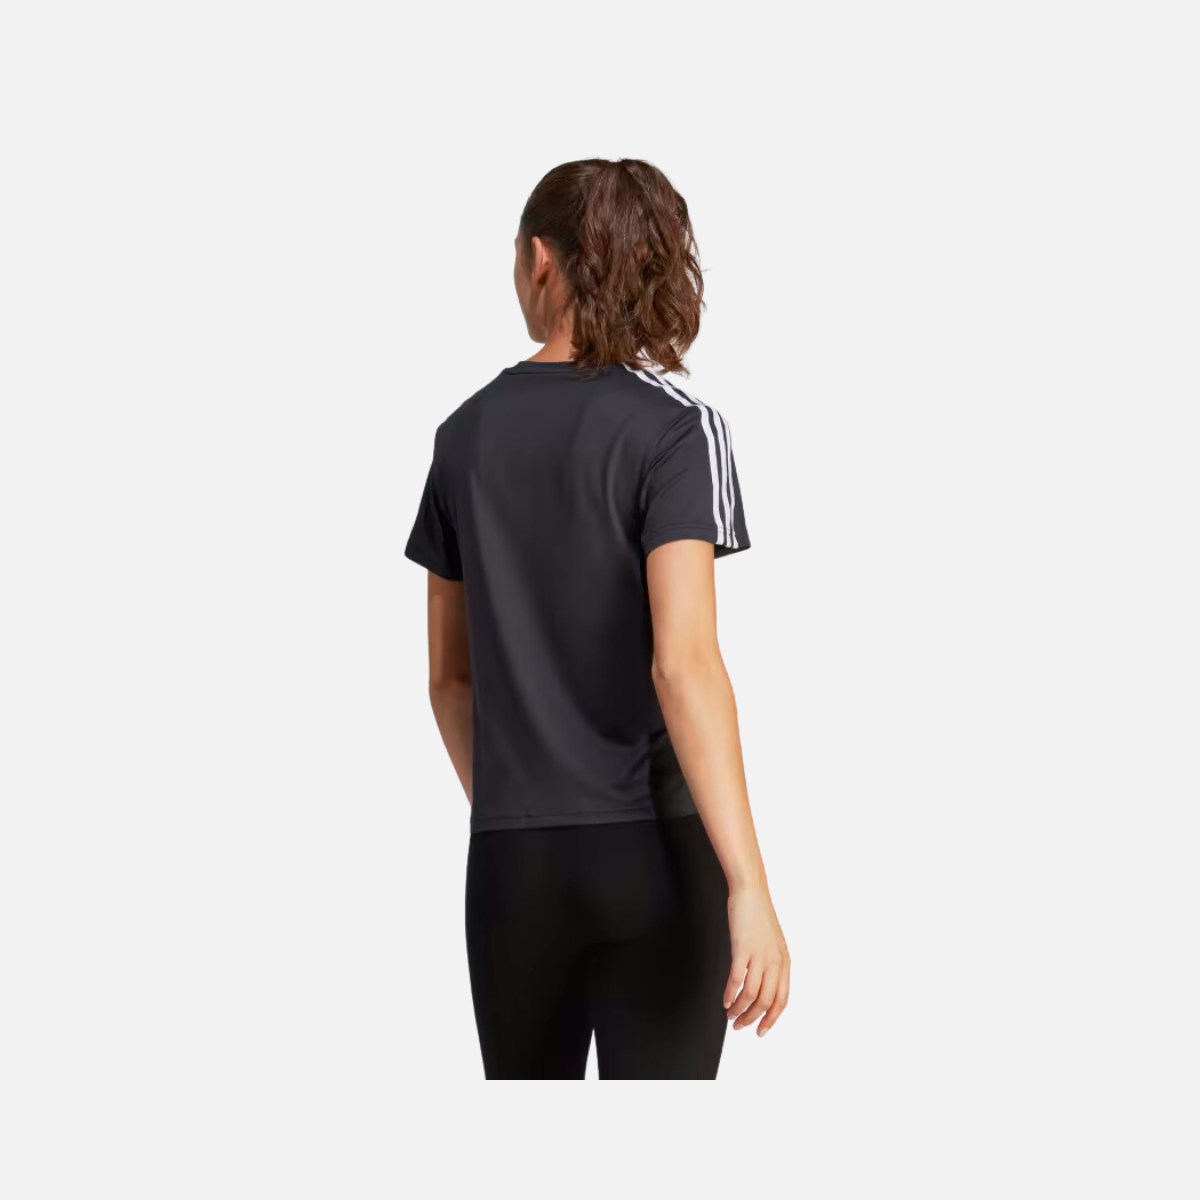 Adidas Aeroready Train Essential 3 stripes Women's Training T-shirt -Black / White